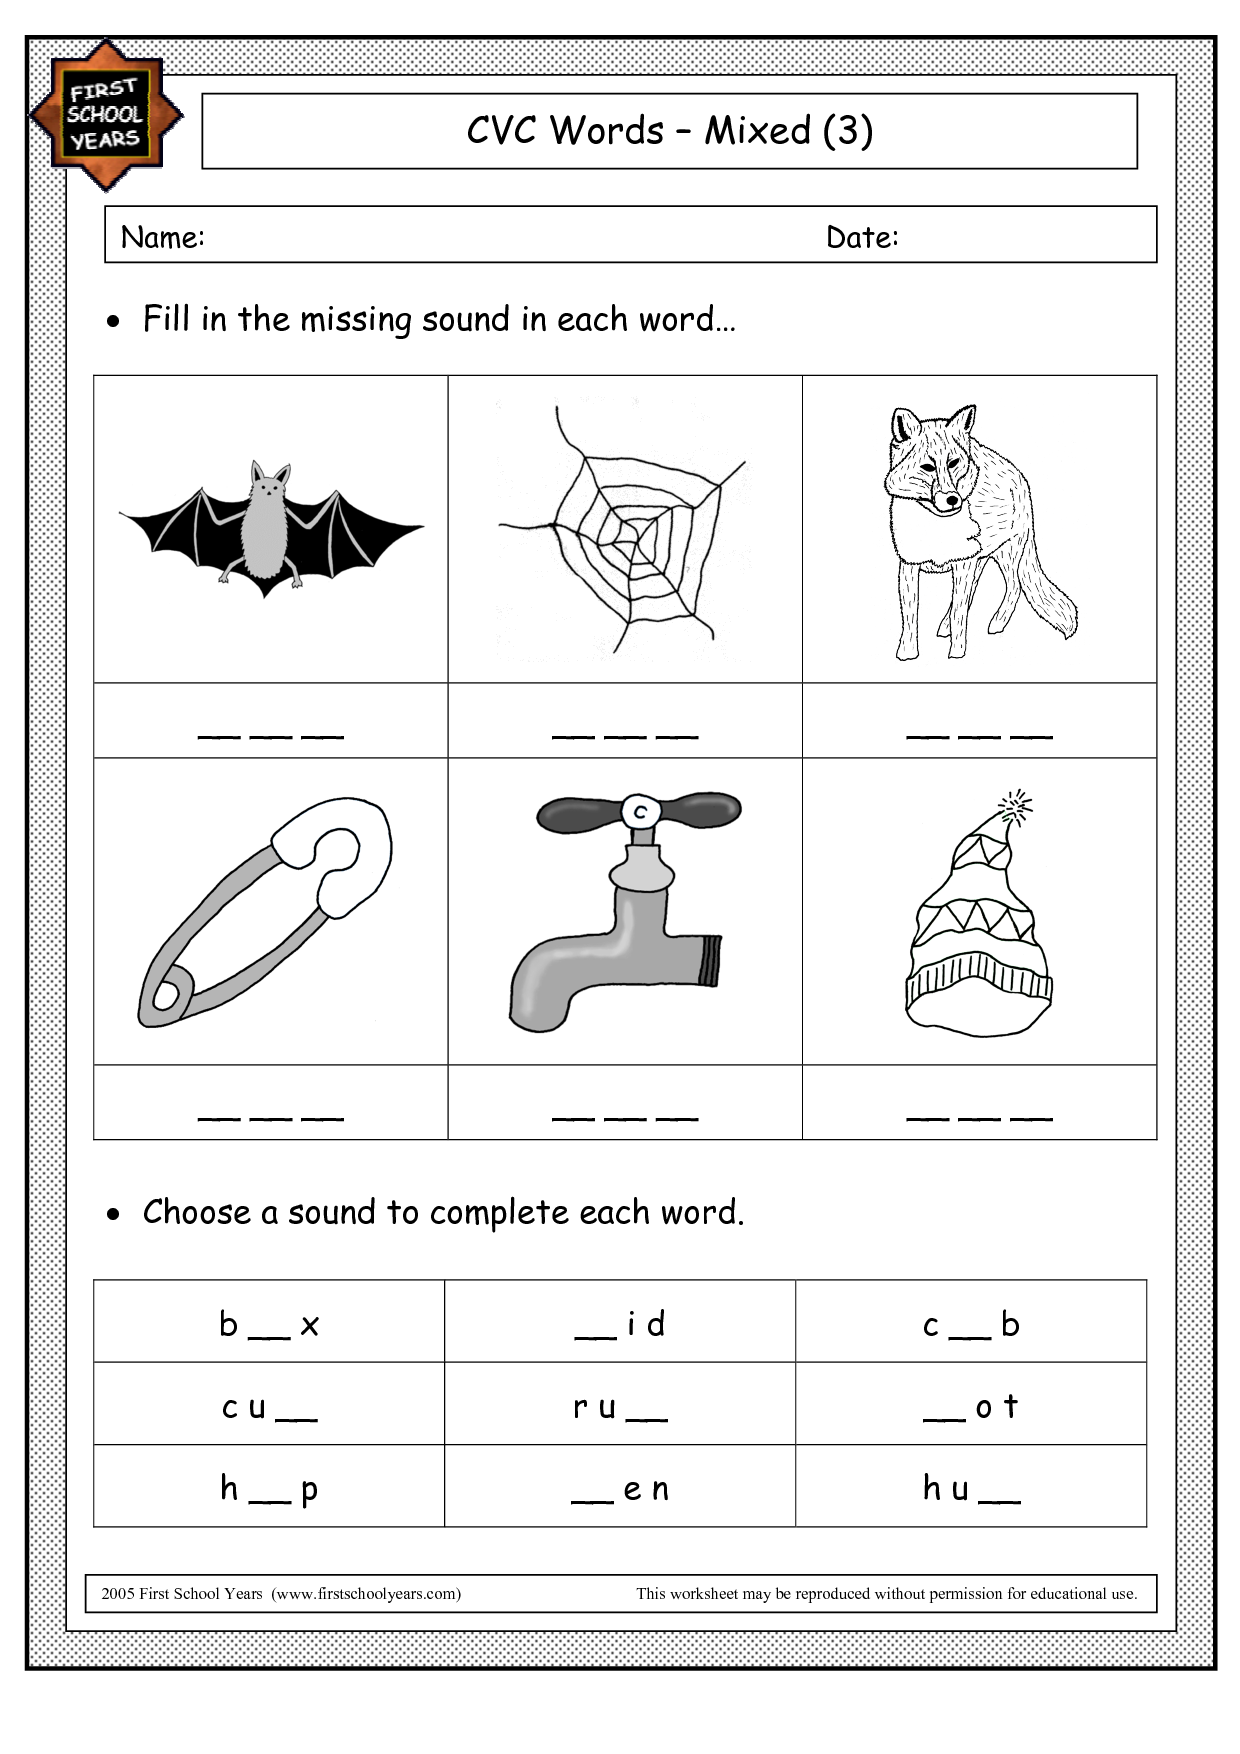 cvc-words-worksheets-free-printable-printable-templates